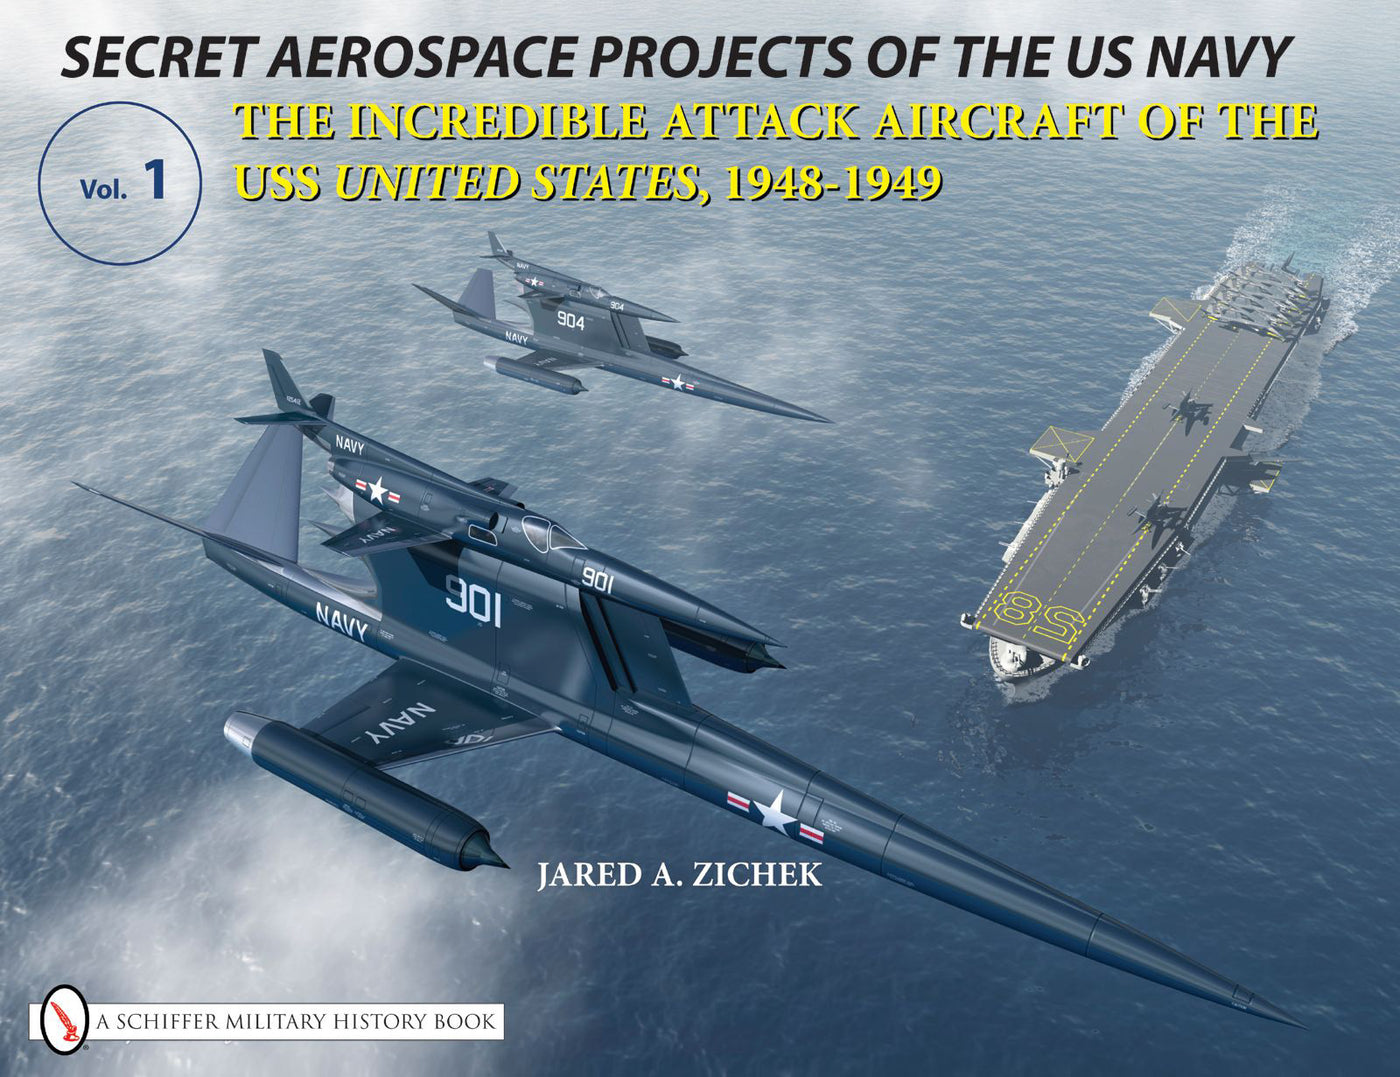 Secret Aerospace Projects of the U.S. Navy